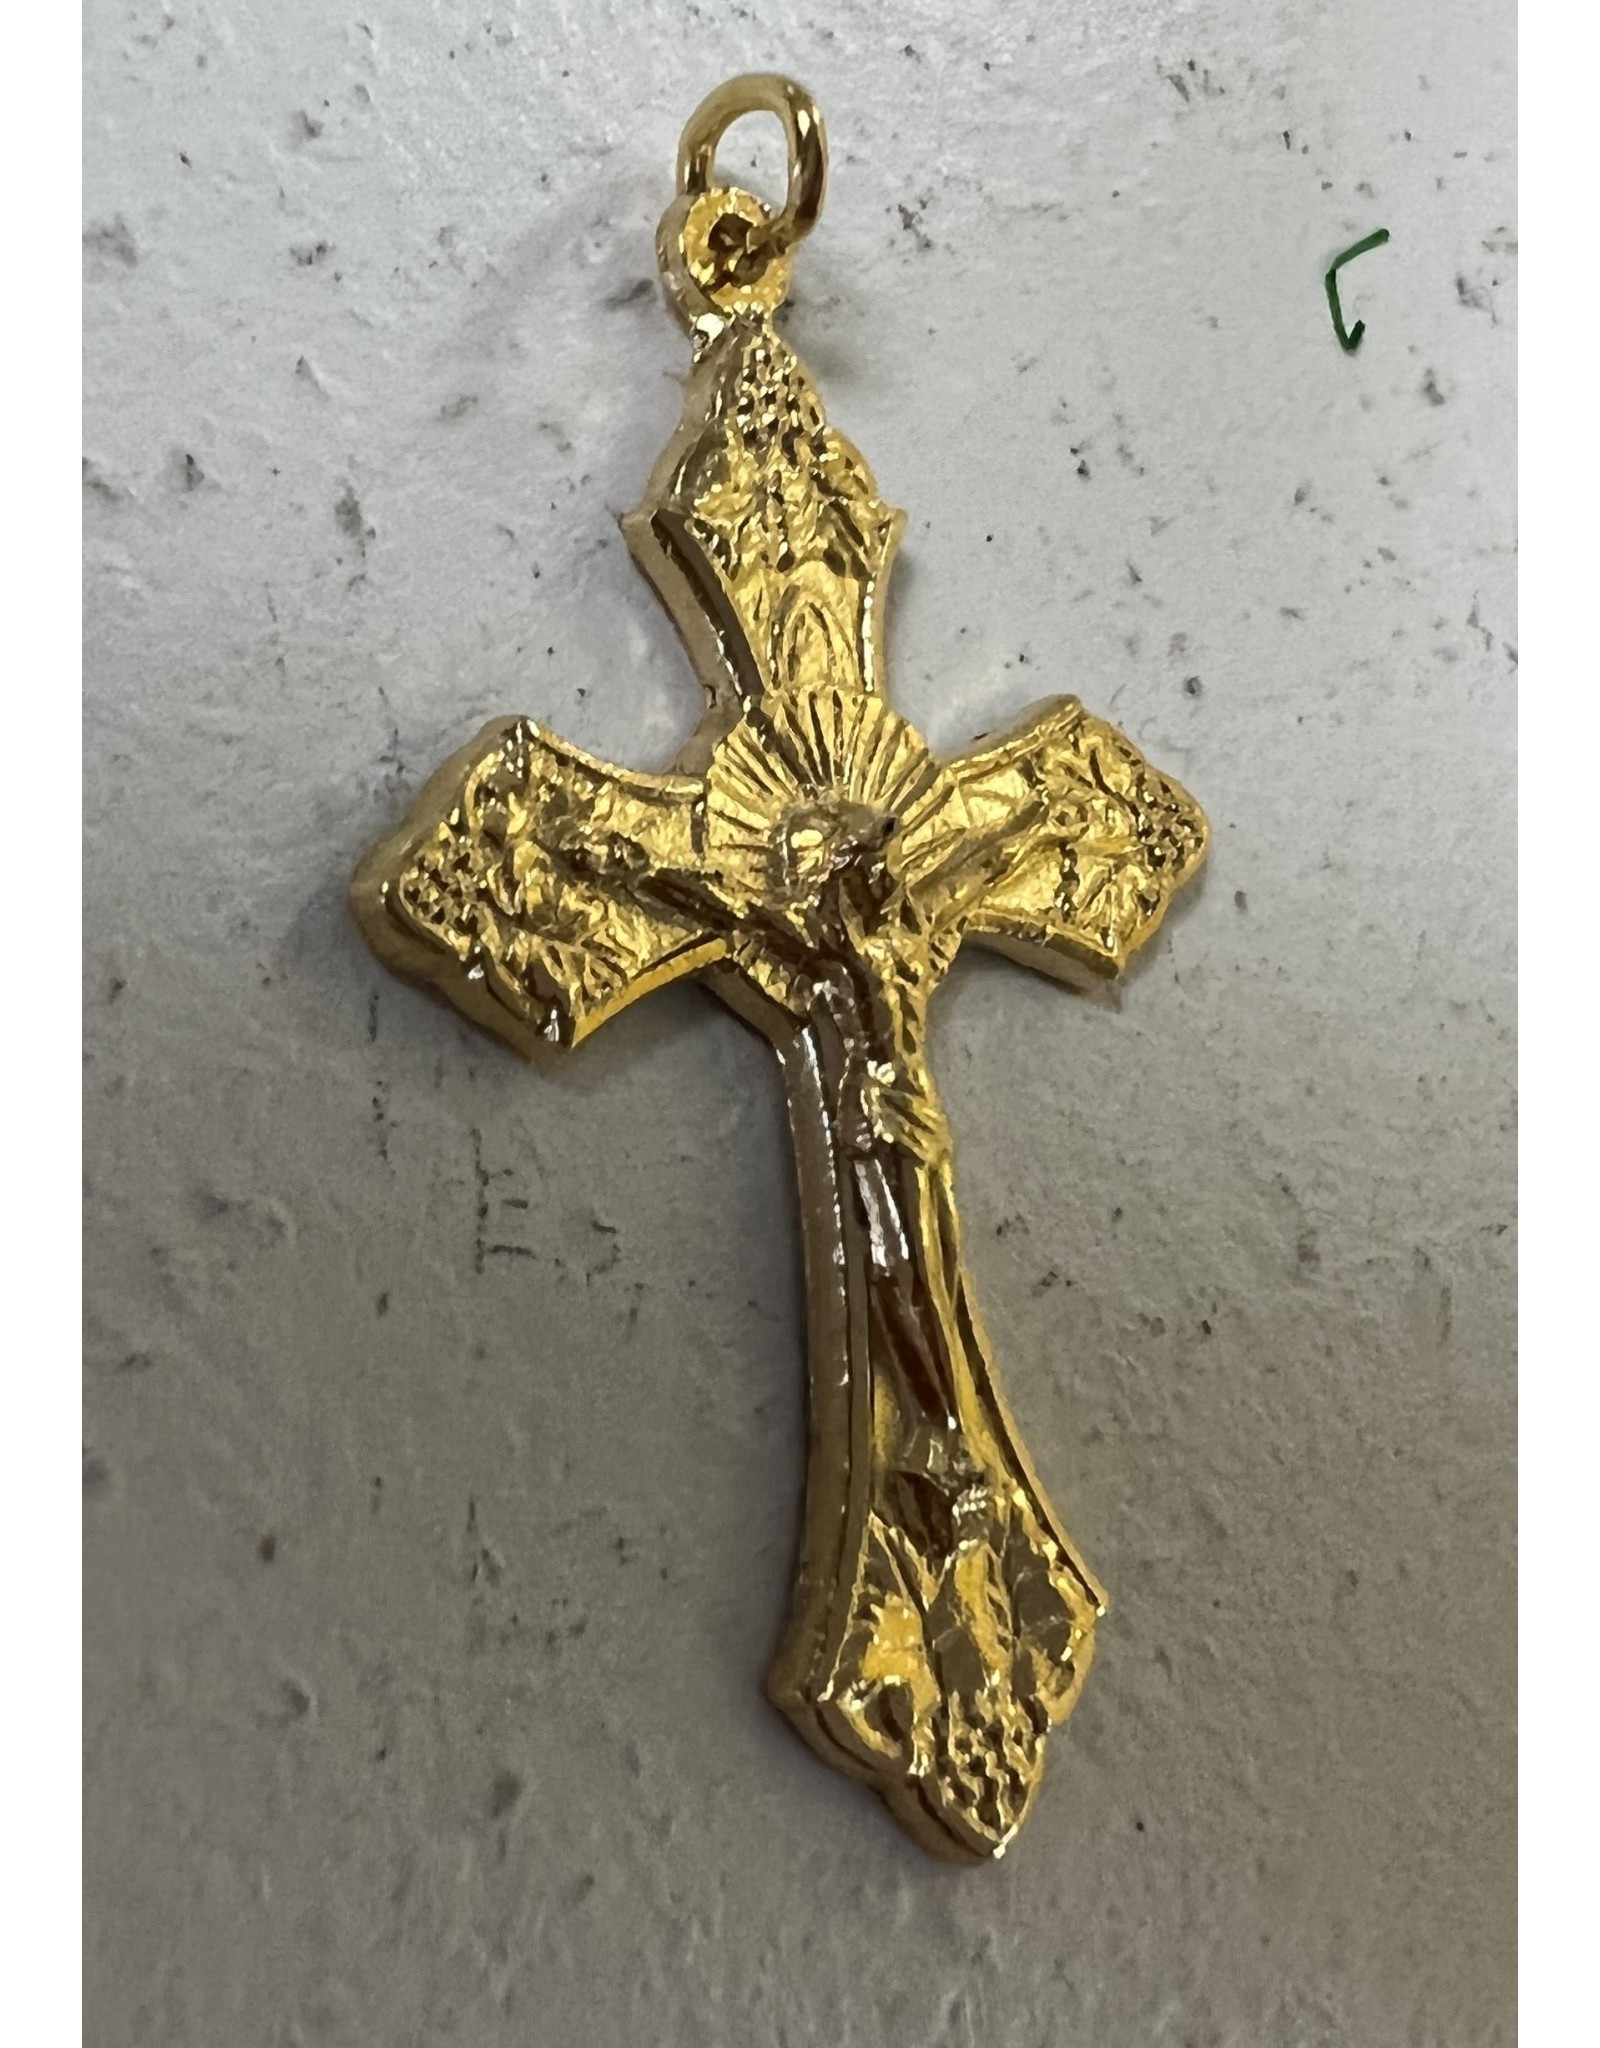 San Francis Medal Crucifix 1.5" Gold